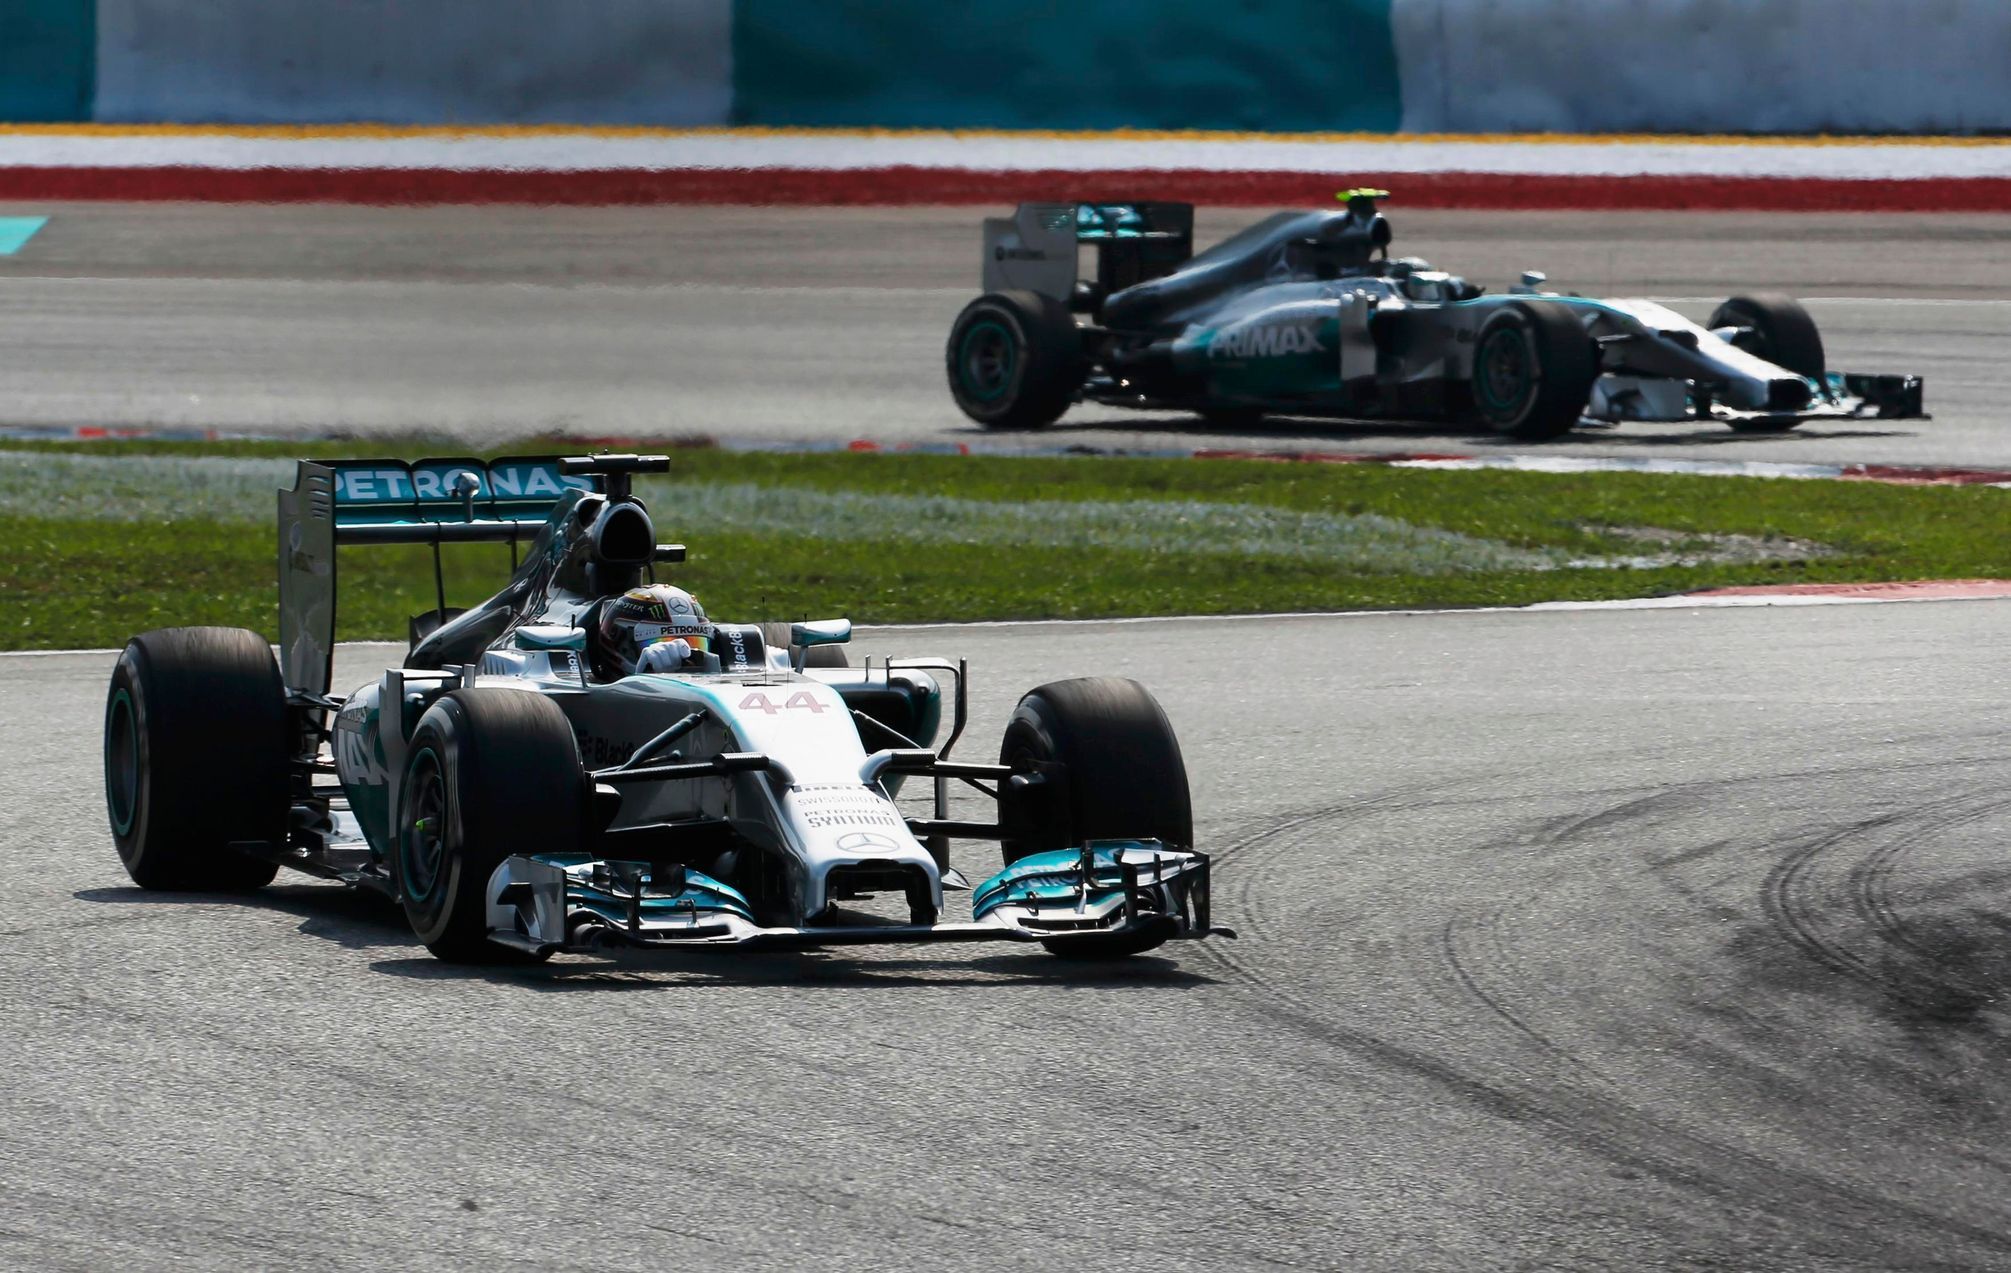 Mercedes Formula One driver Hamilton drives ahead of team mate Rosberg during the Malaysian F1 Grand Prix at Sepang International Circuit outside Kuala Lumpur